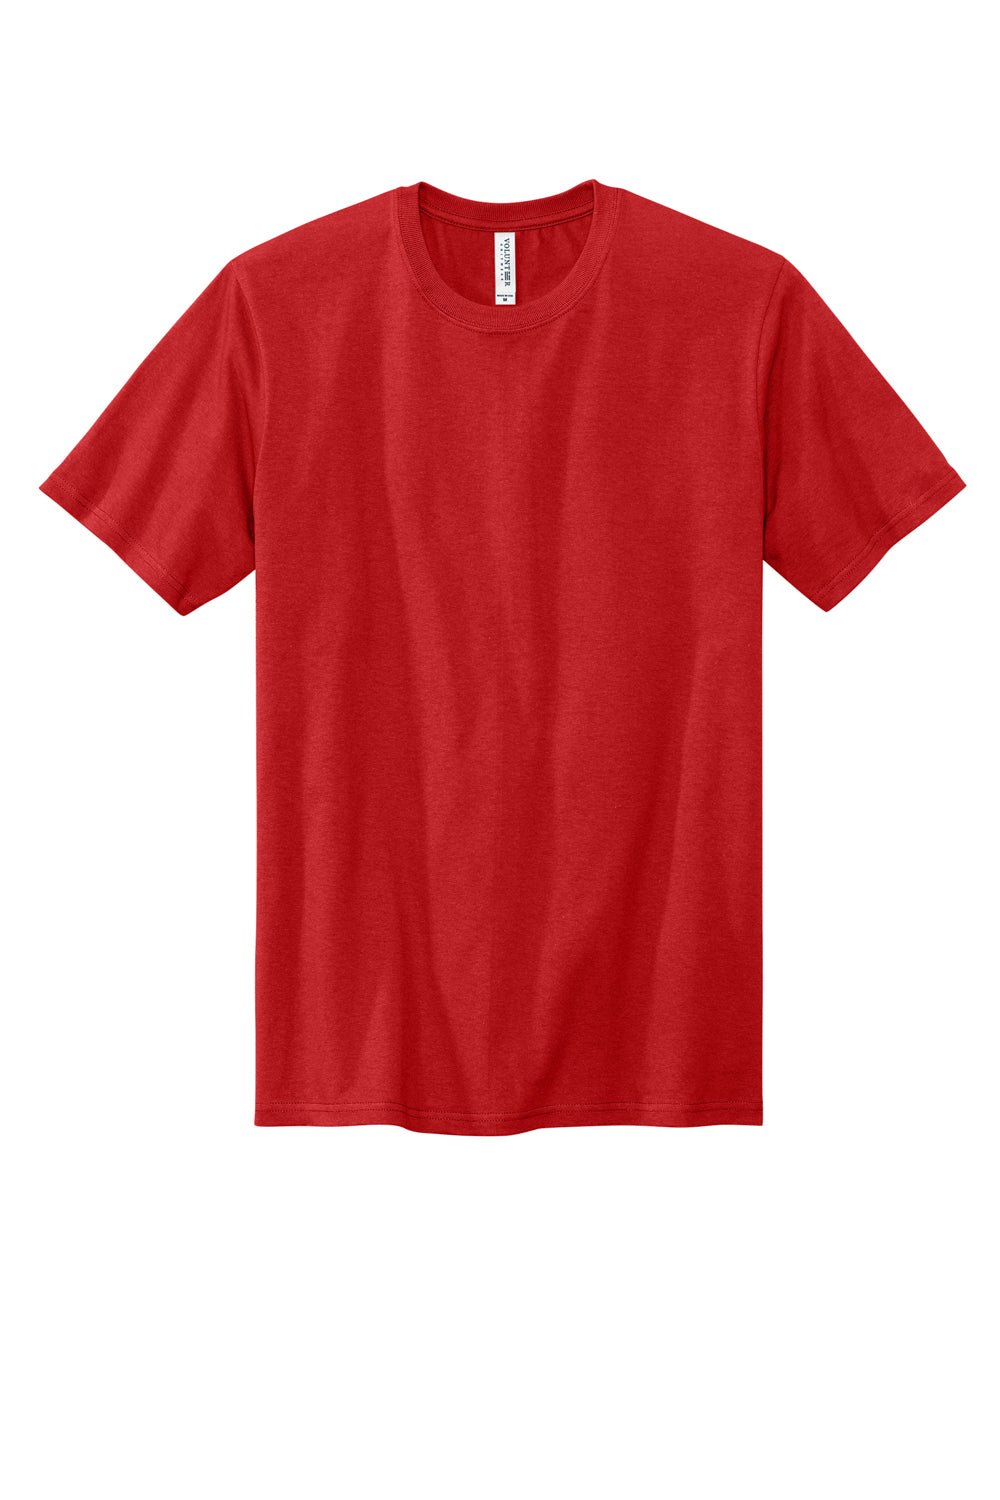 Volunteer Knitwear VL100 USA Made All American Short Sleeve Crewneck T-Shirts Flag Red Flat Front